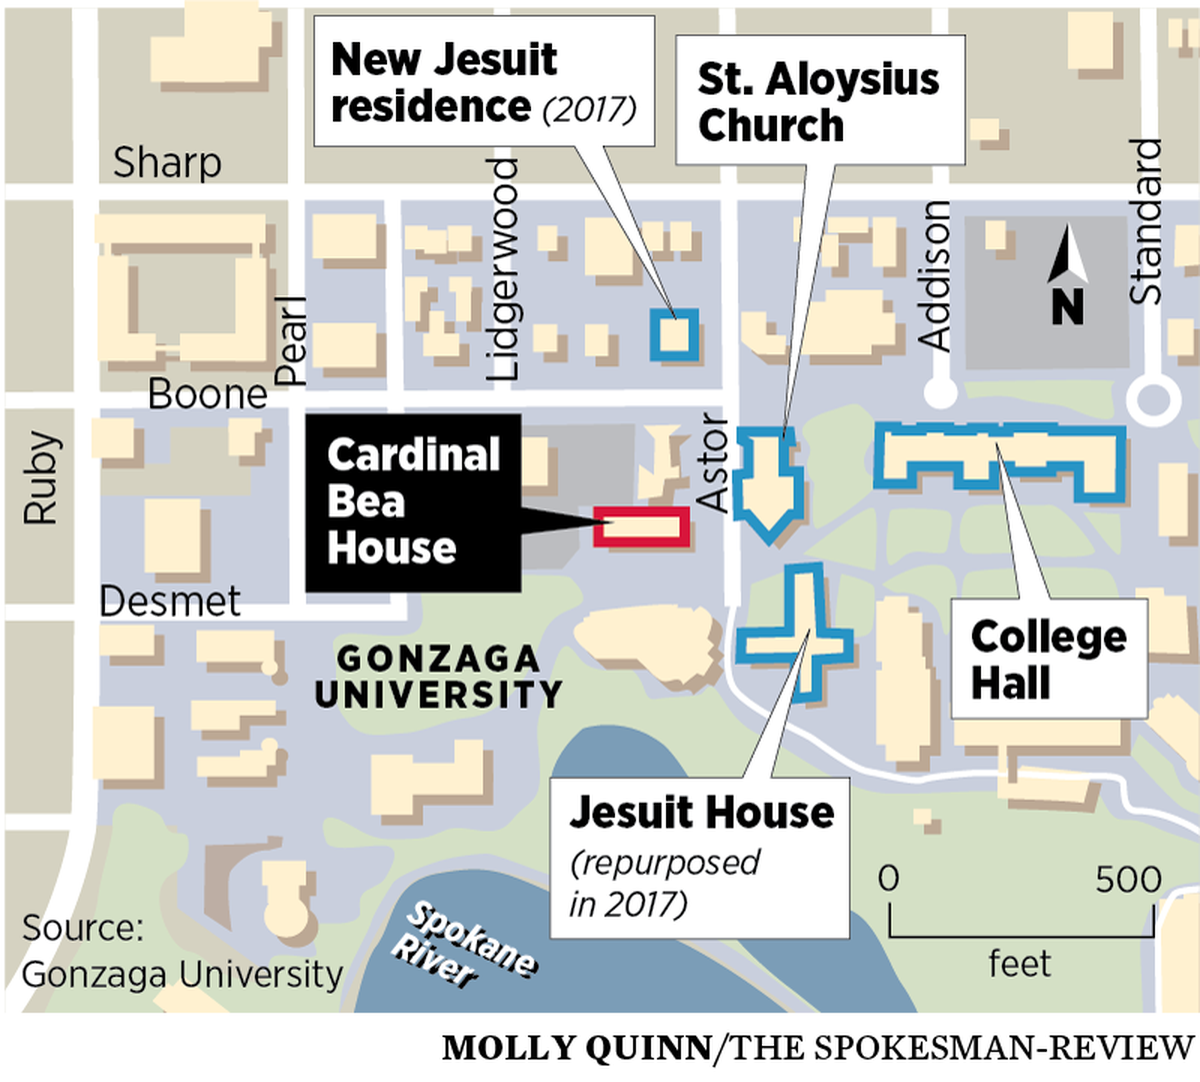 gonzaga university campus map